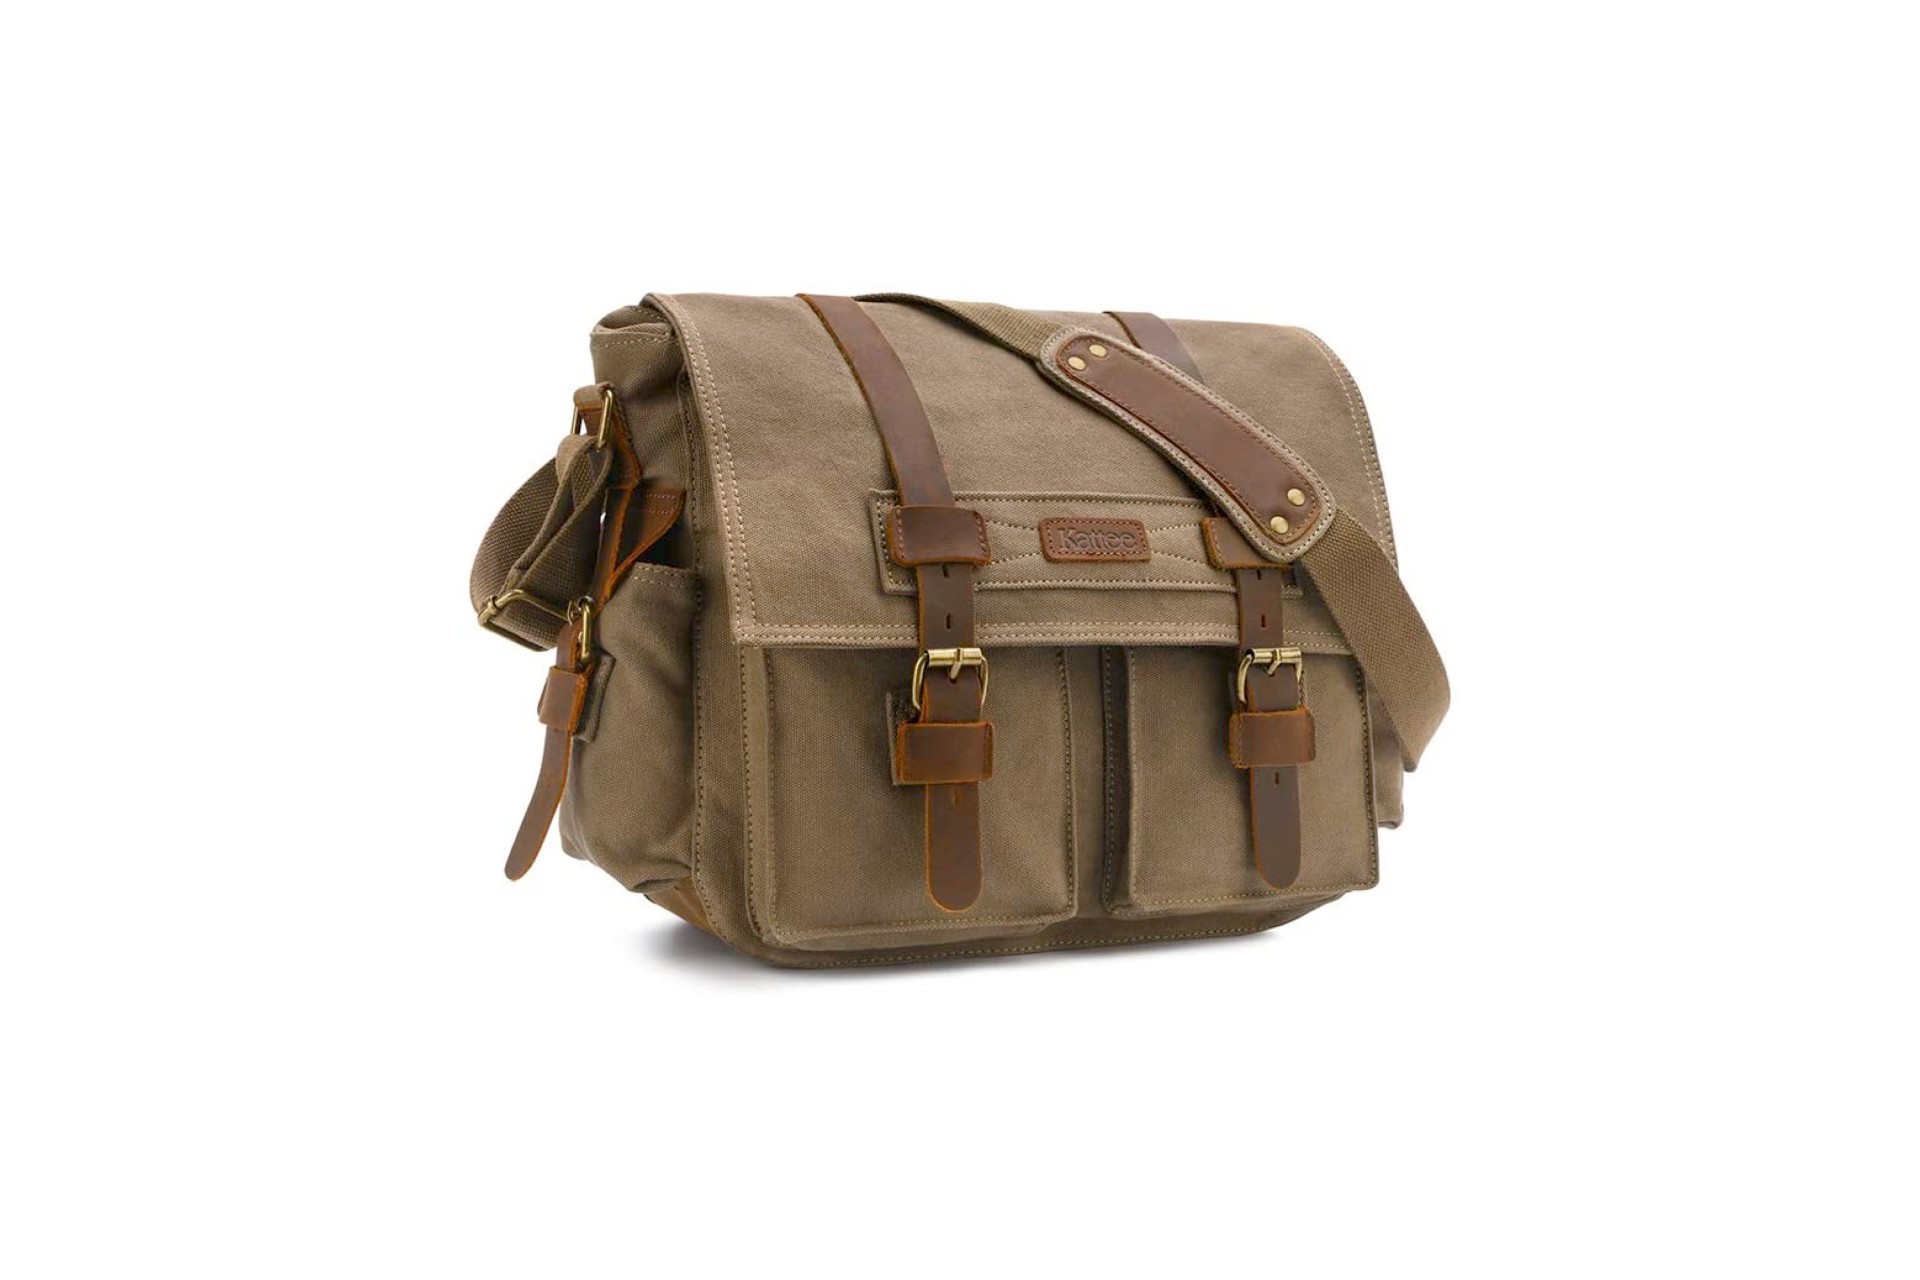 Sweetbriar Classic Messenger Bag - Vintage Canvas Shoulder Bag For All-Purpose Use